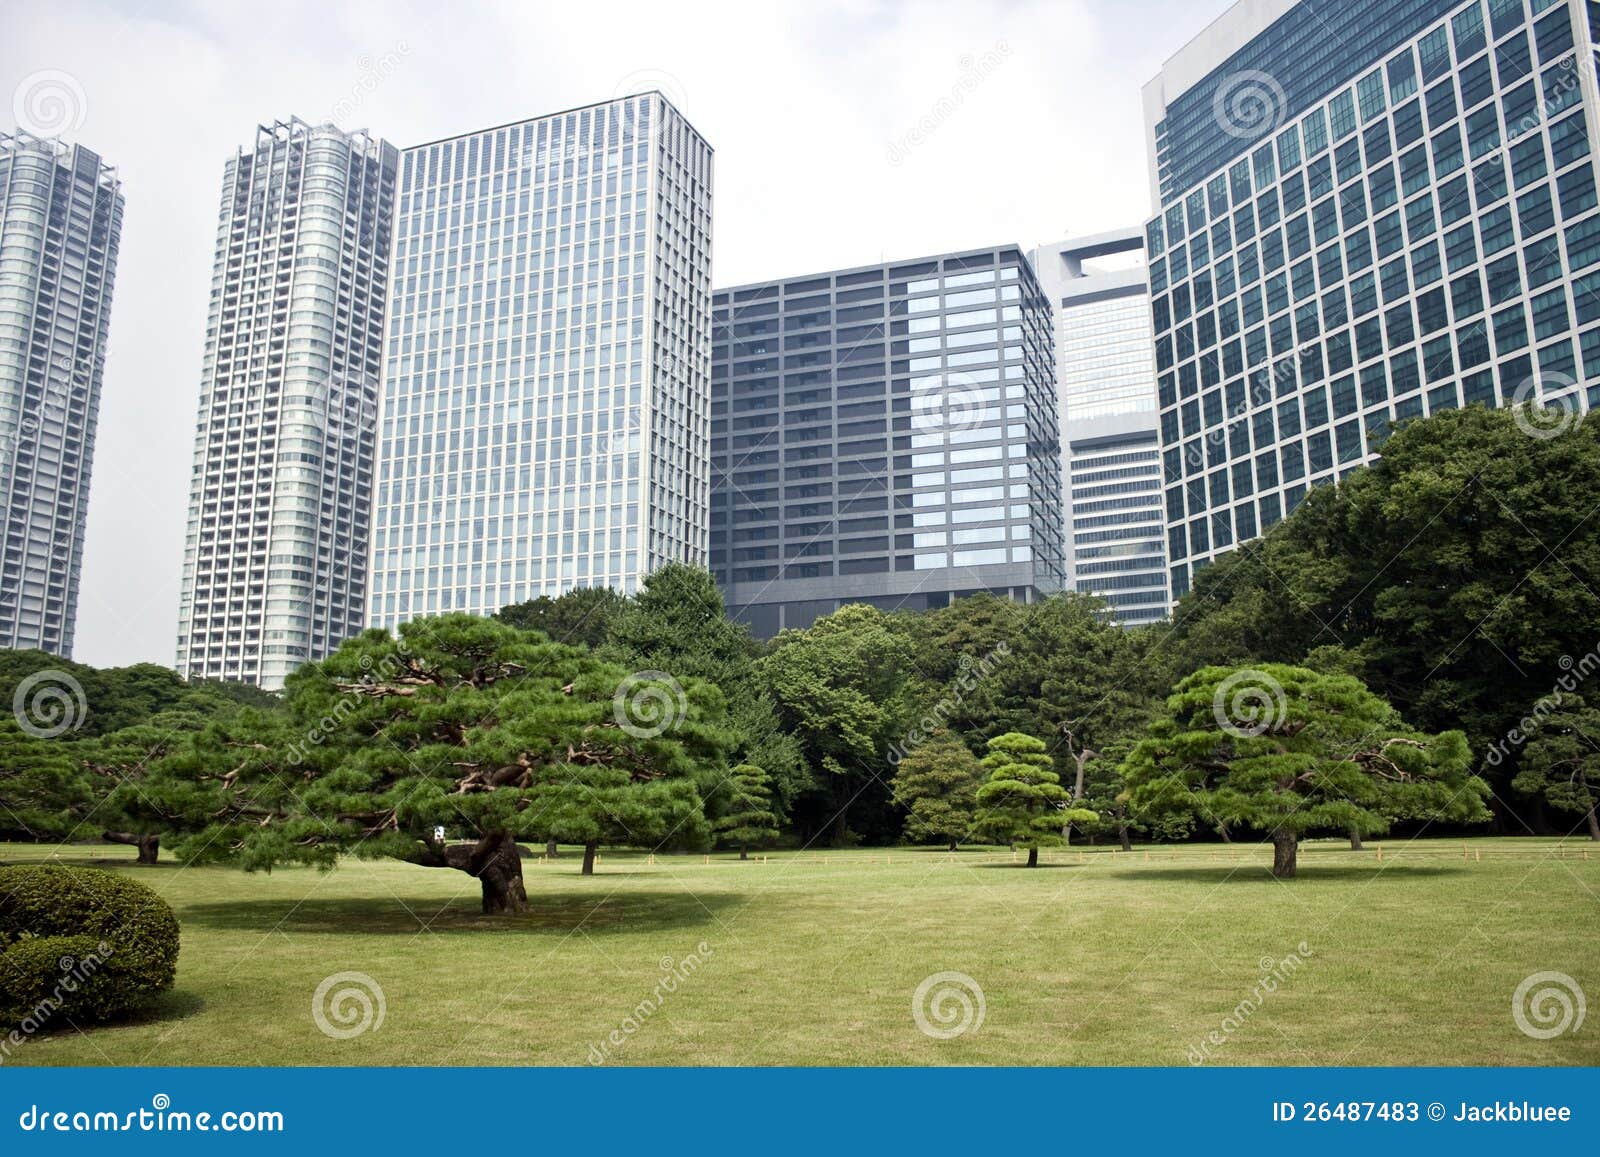 office buildings surrounding japanese garden